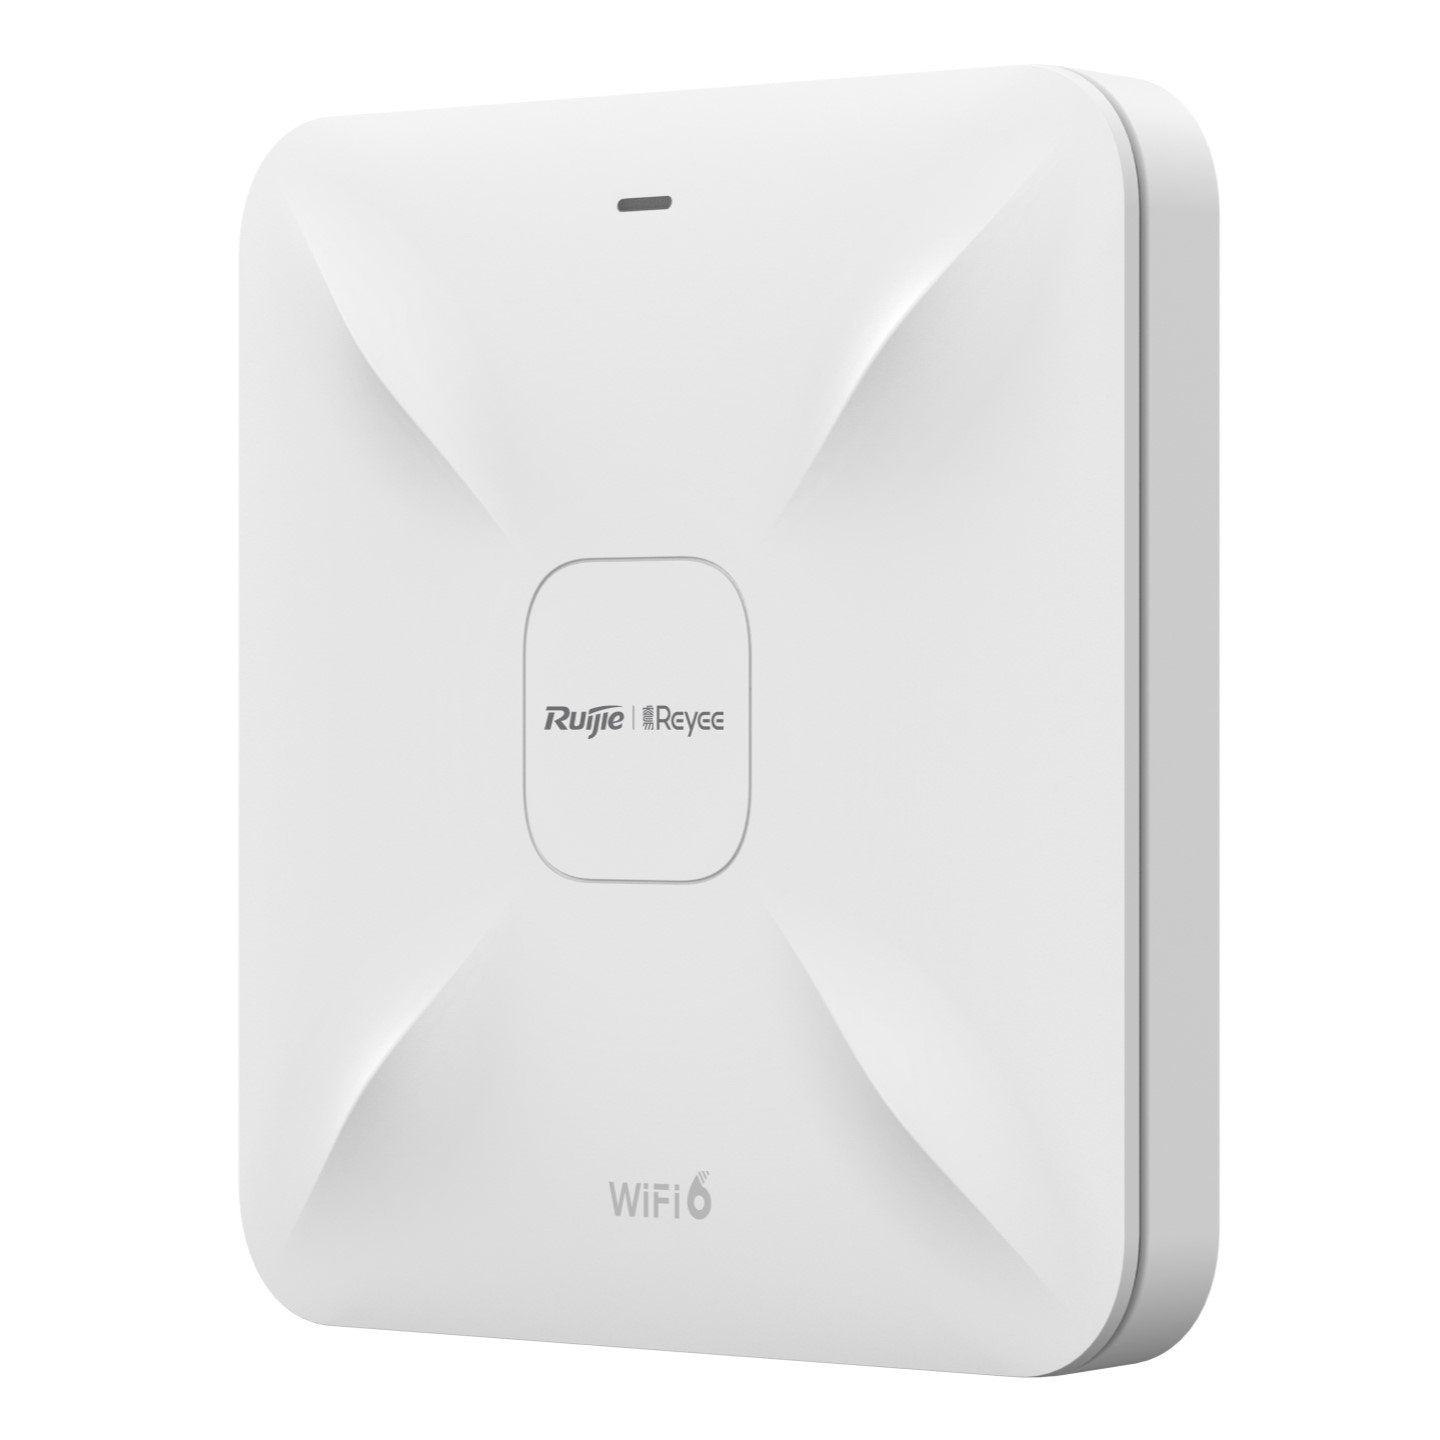 **SALE** Ruijie Reyee Internal WiFi6 Gigabit Access Point AX3200, 3202Mbps, Dual Band (Up To 30M Range)